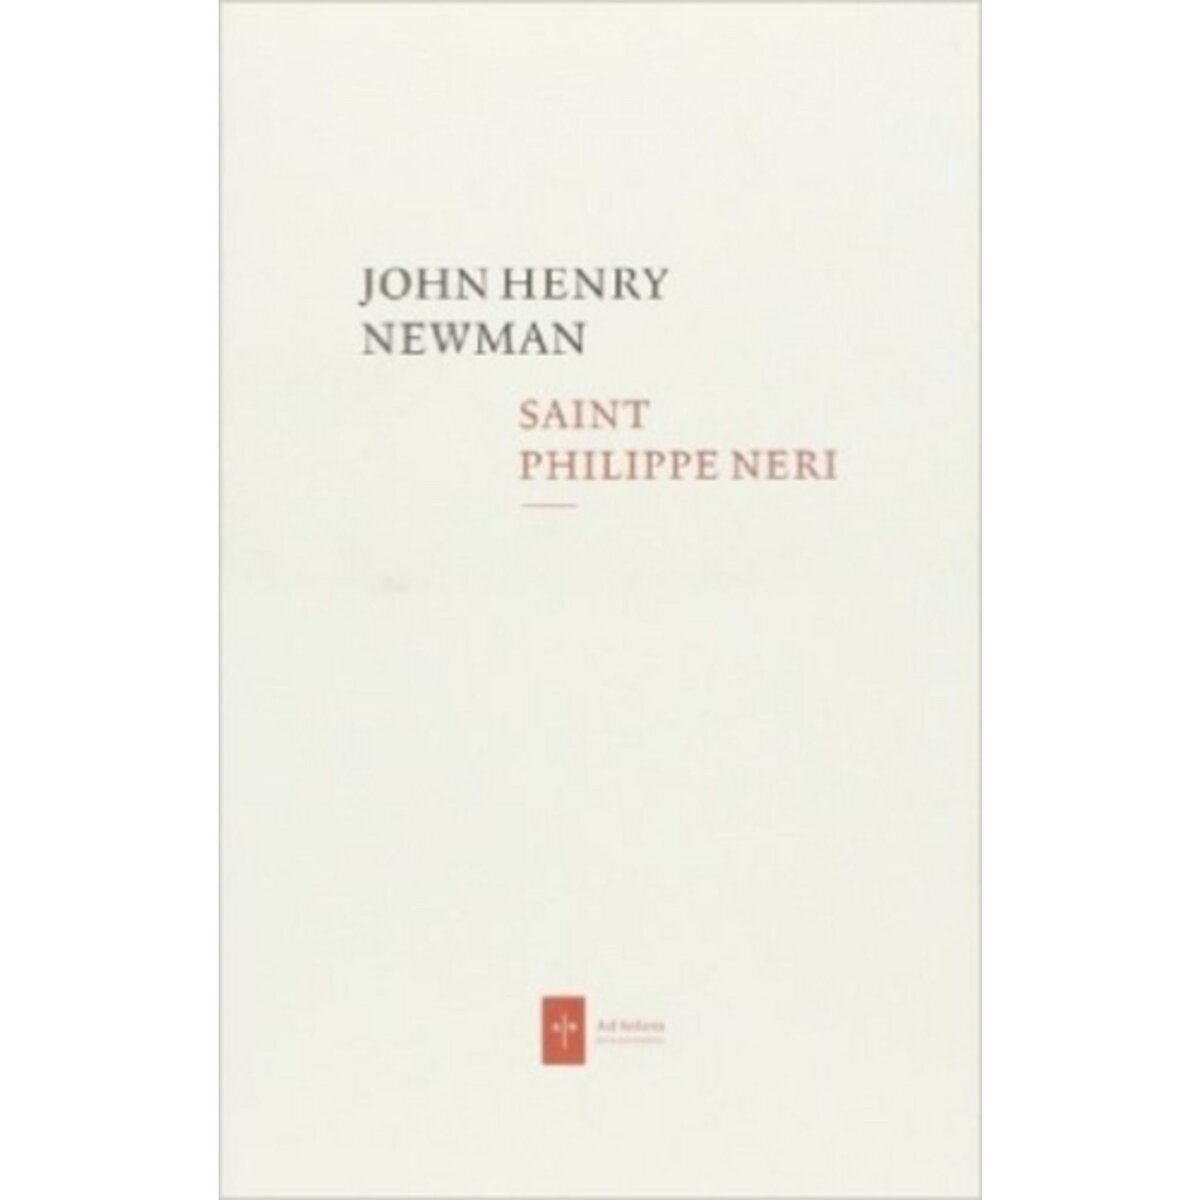  SAINT PHILIPPE NERI, Newman John Henry